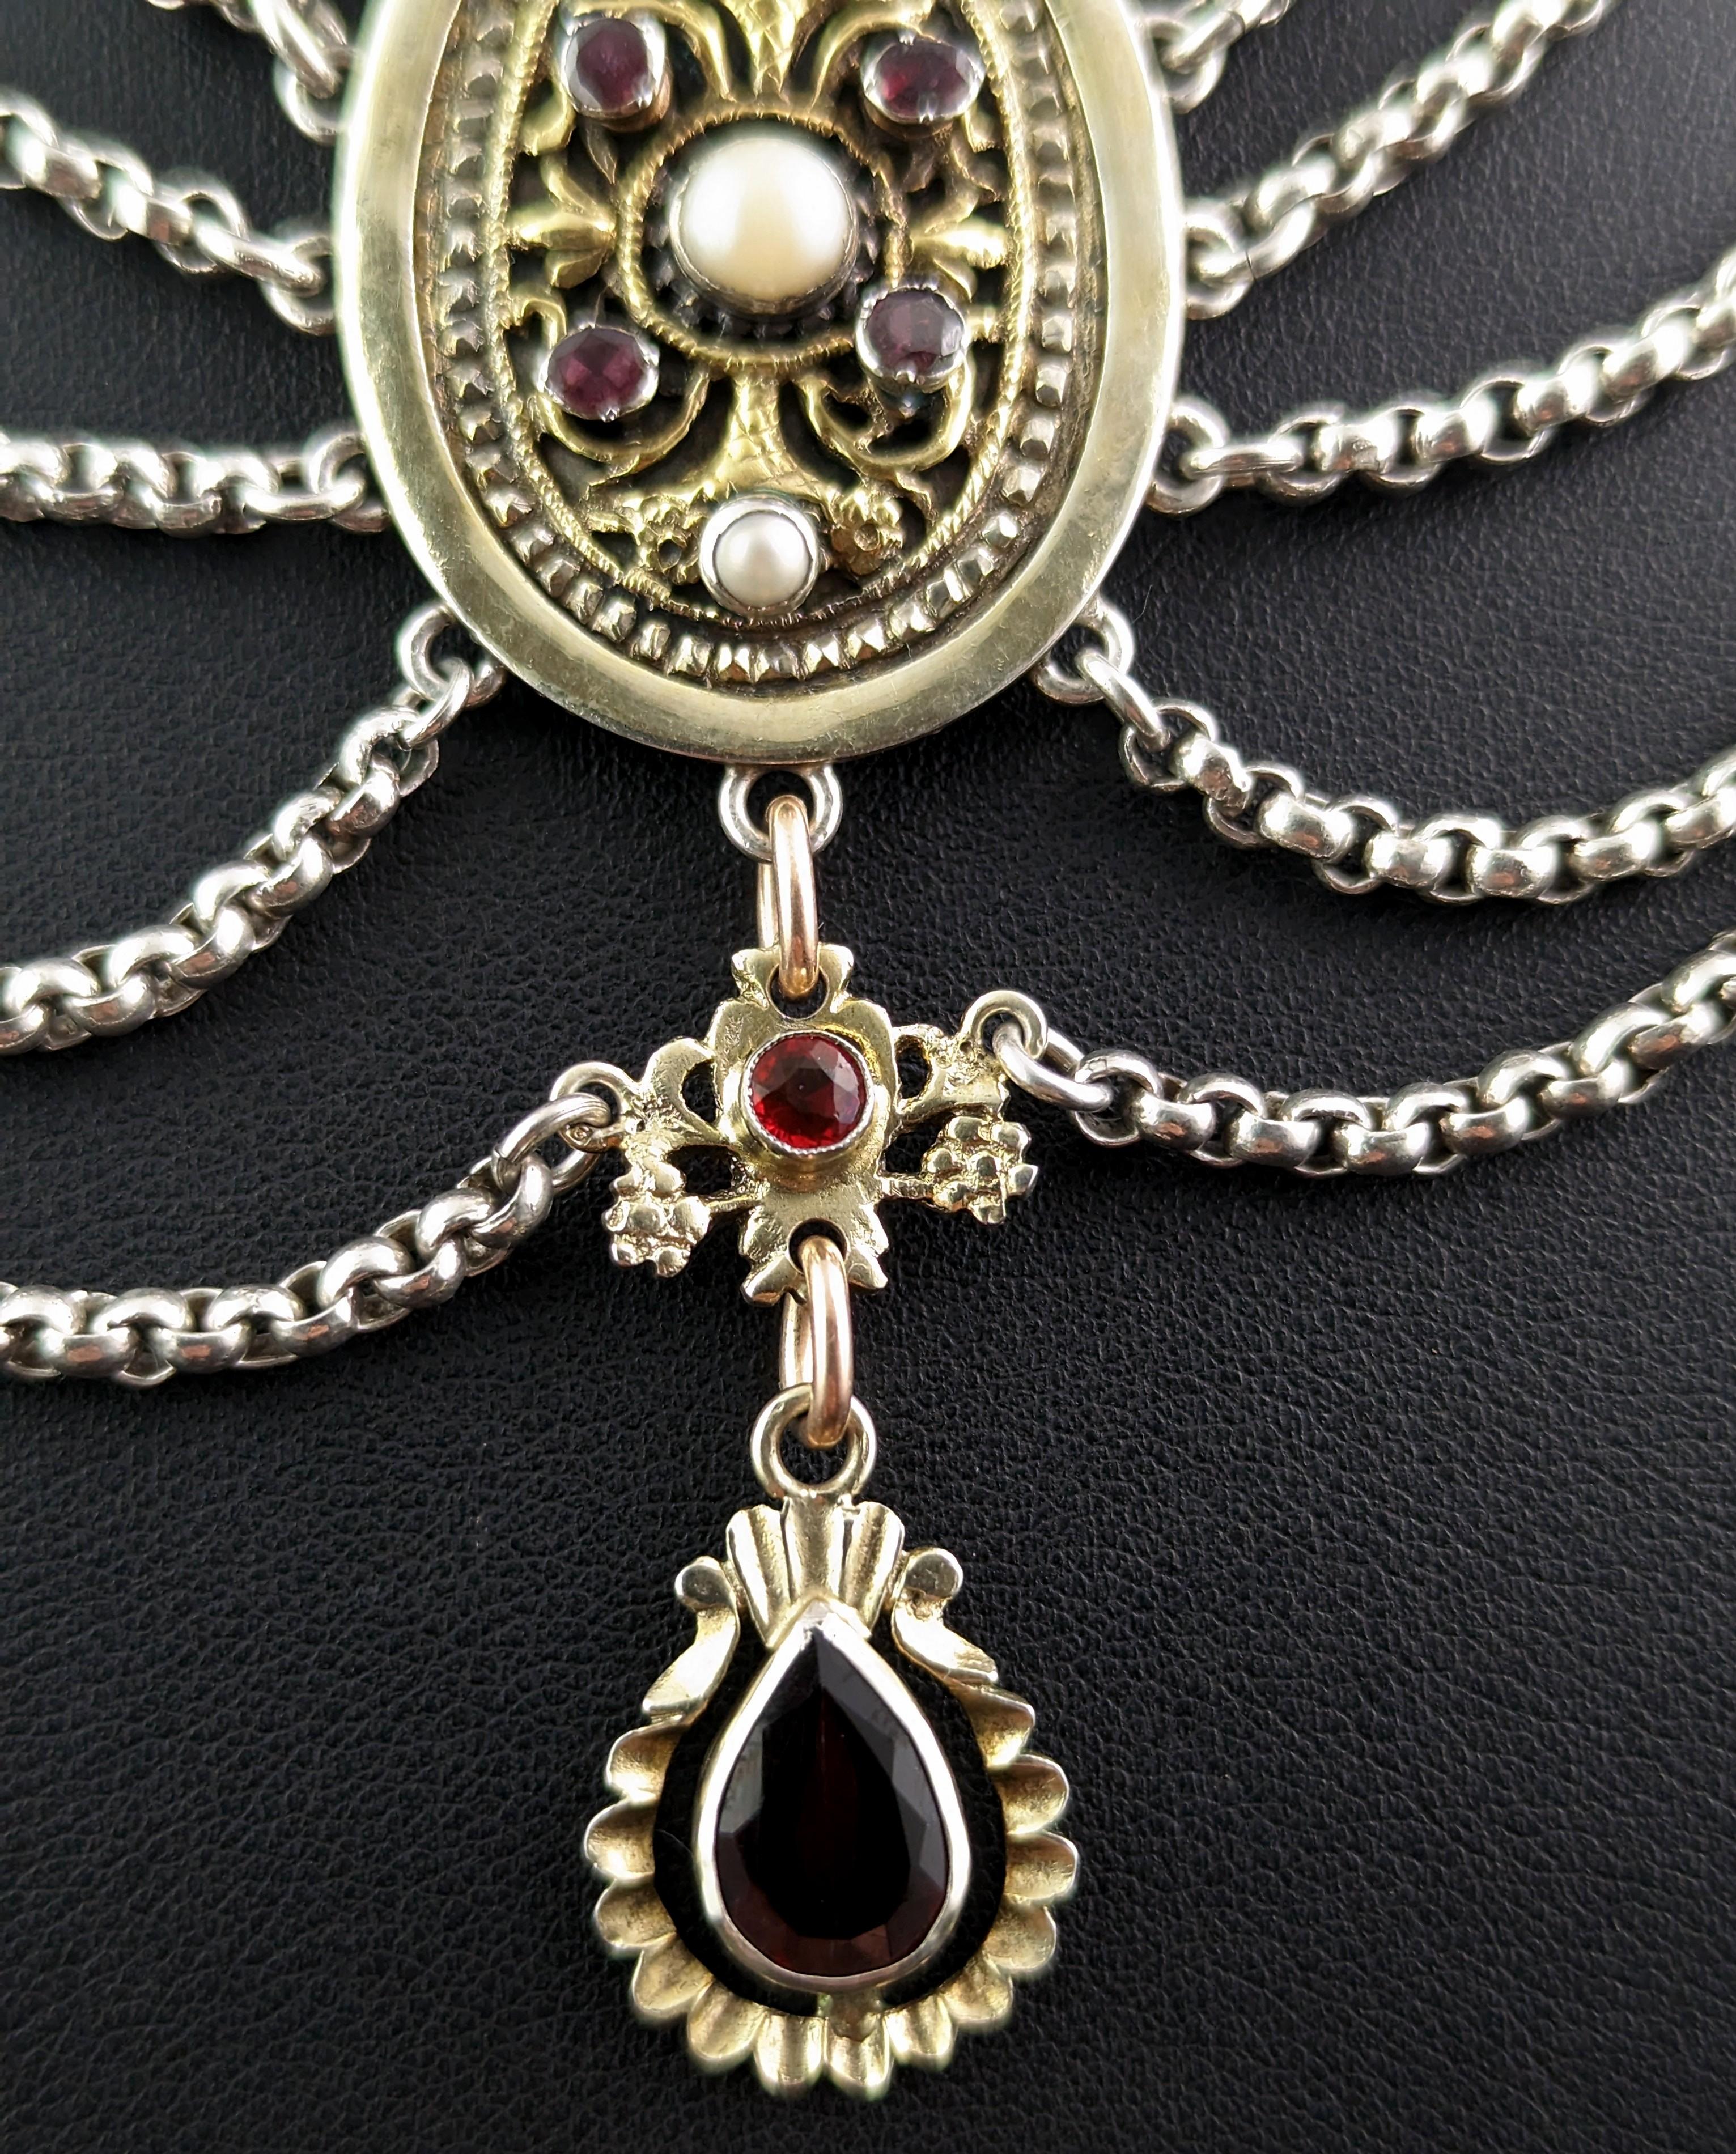 Women's or Men's Antique Austro-Hungarian Festoon Necklace, Silver, Garnet, Pearl and Paste